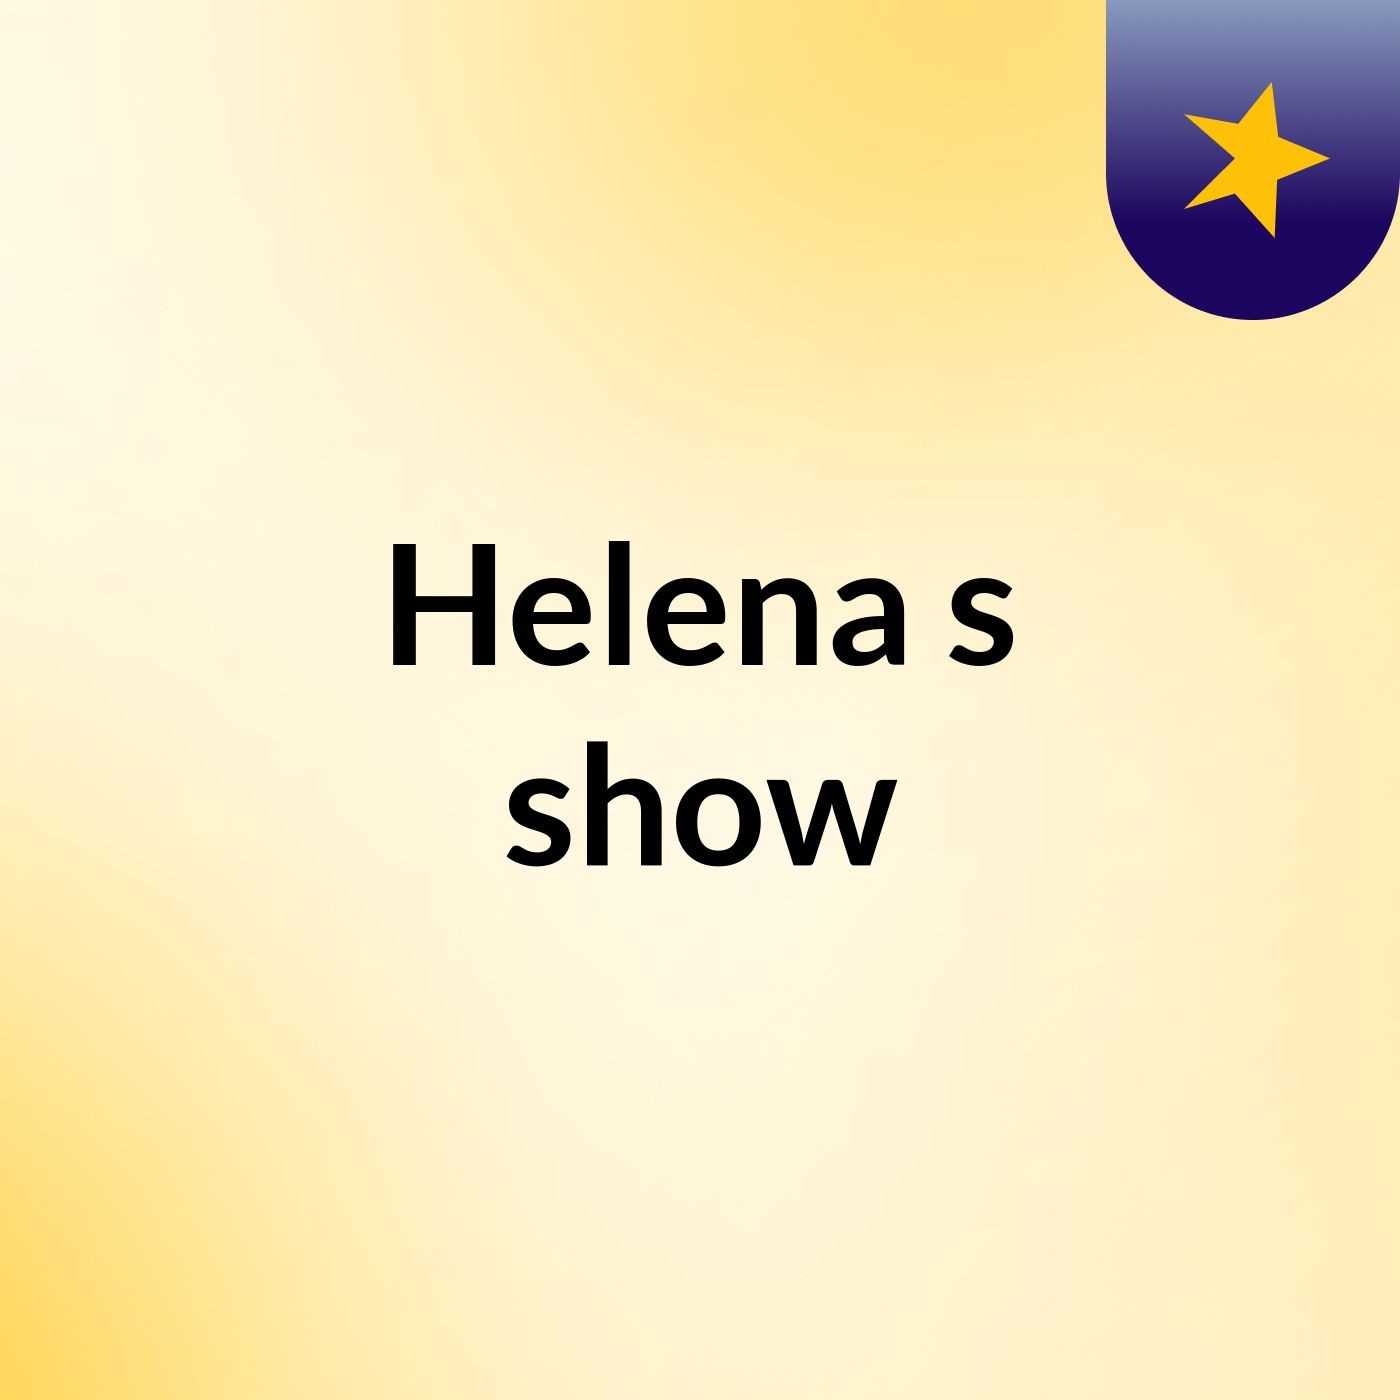 Helena's show